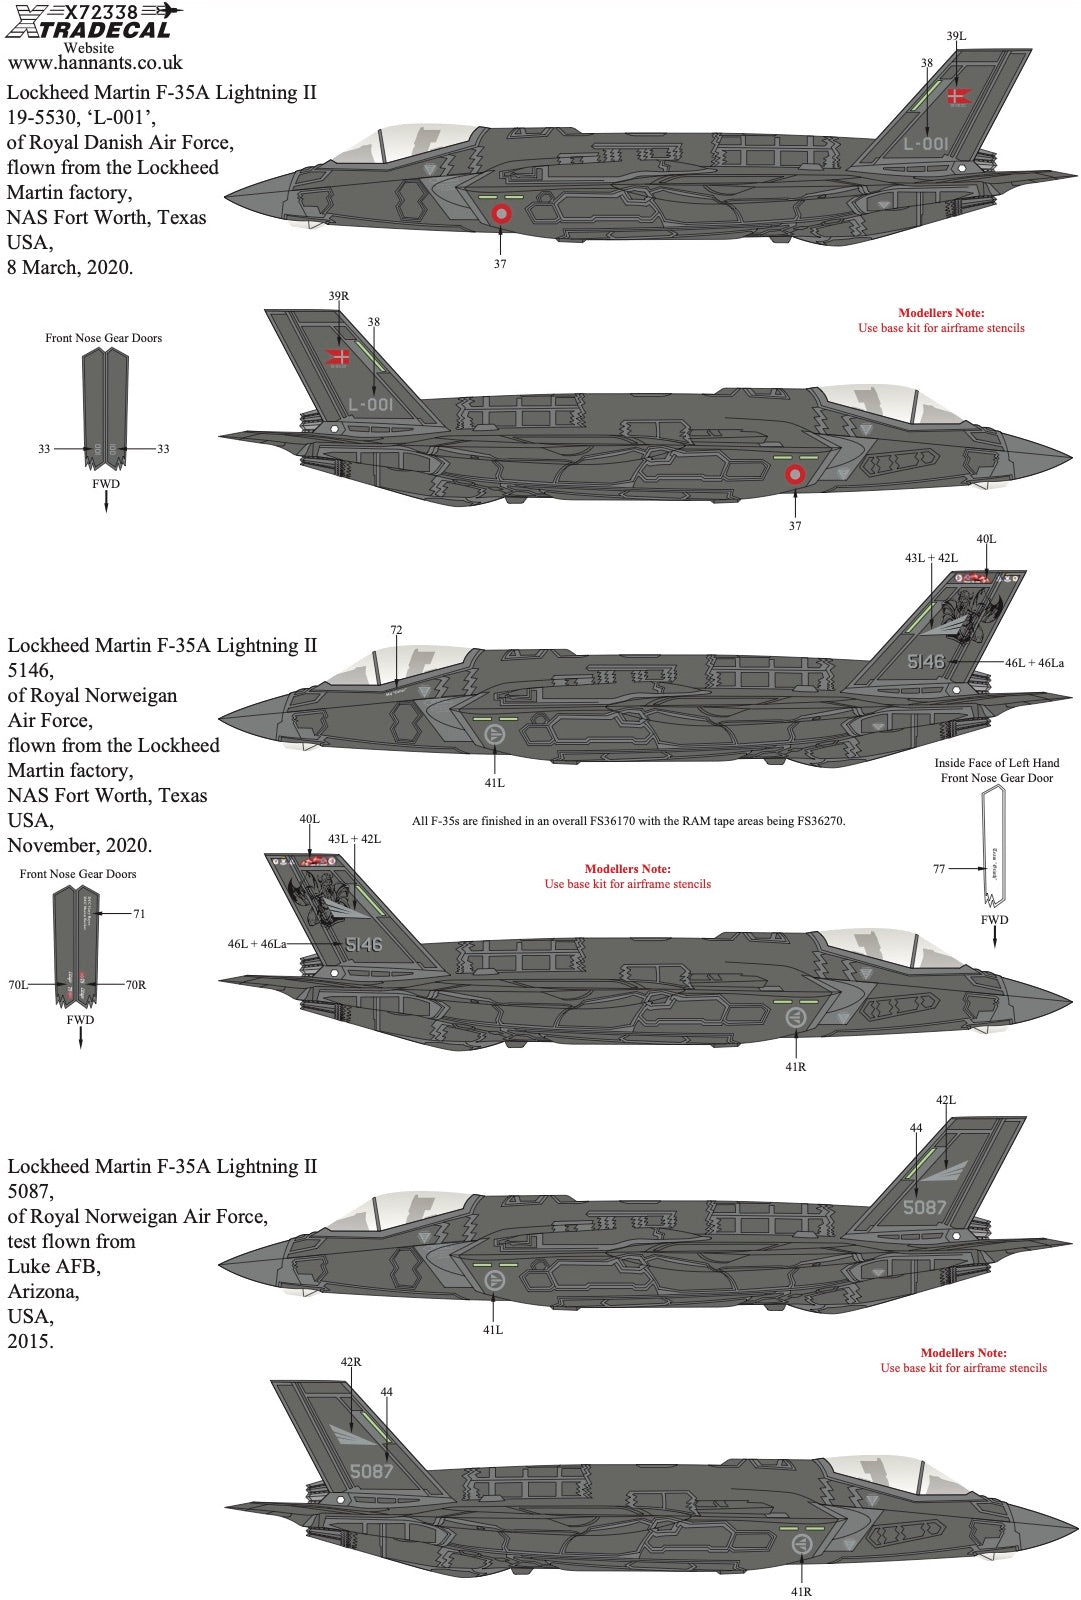 Xtradecal X72338 F-35A / B Lightning II Worldwide Collection 1/72